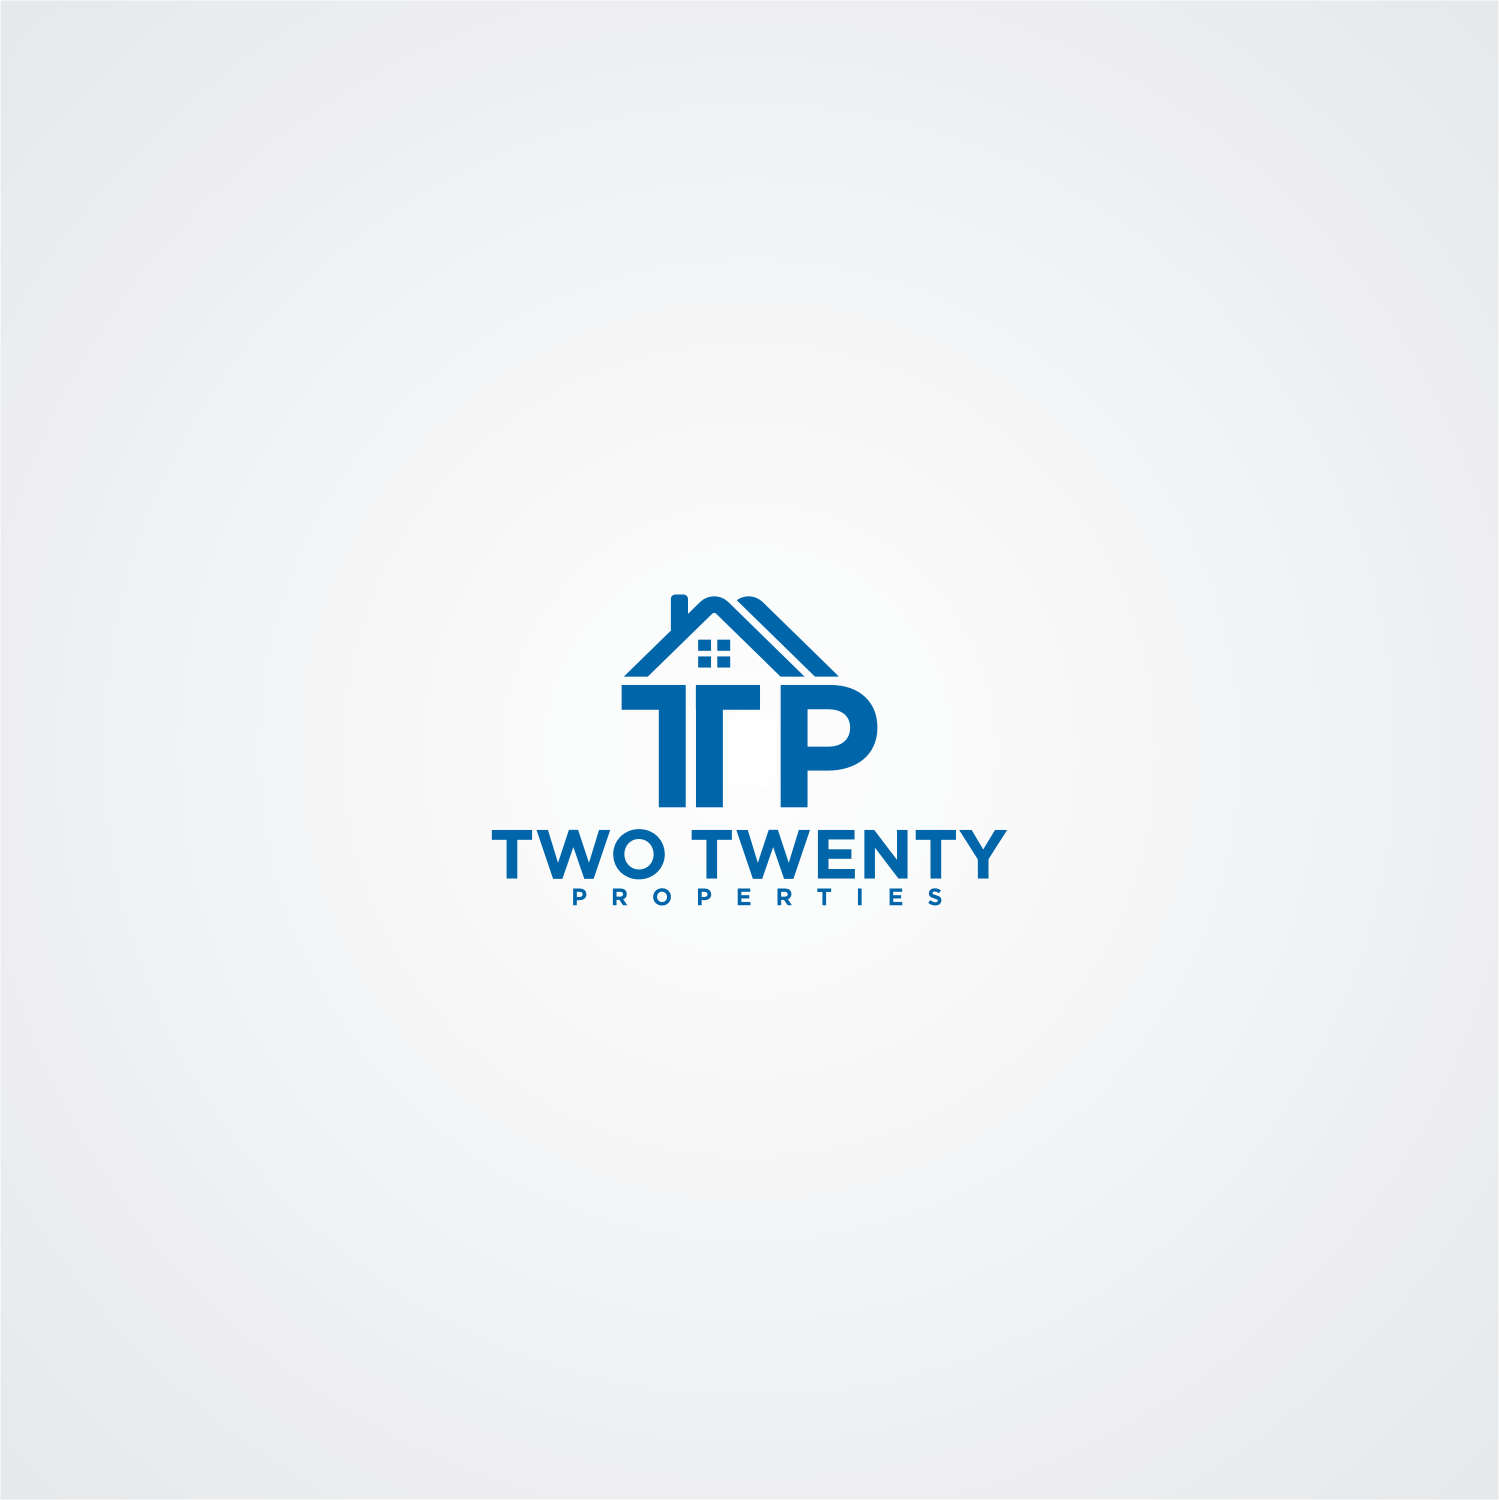 Two F Logo - Modern, Bold, Real Estate Logo Design for Two Twenty Properties